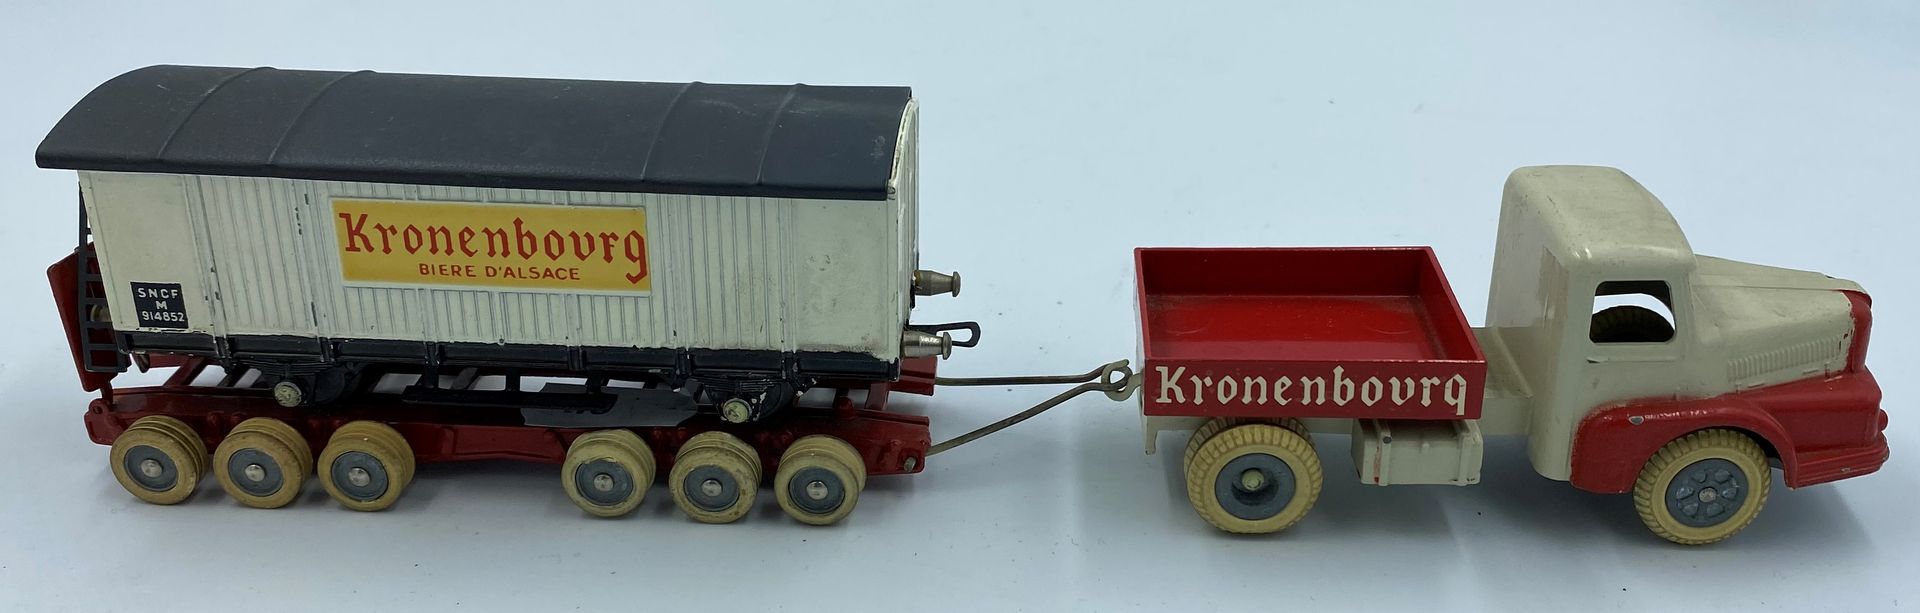 JRD ǞǞǞ

Kronembourg的Unic拖拉机拖车

状况良好